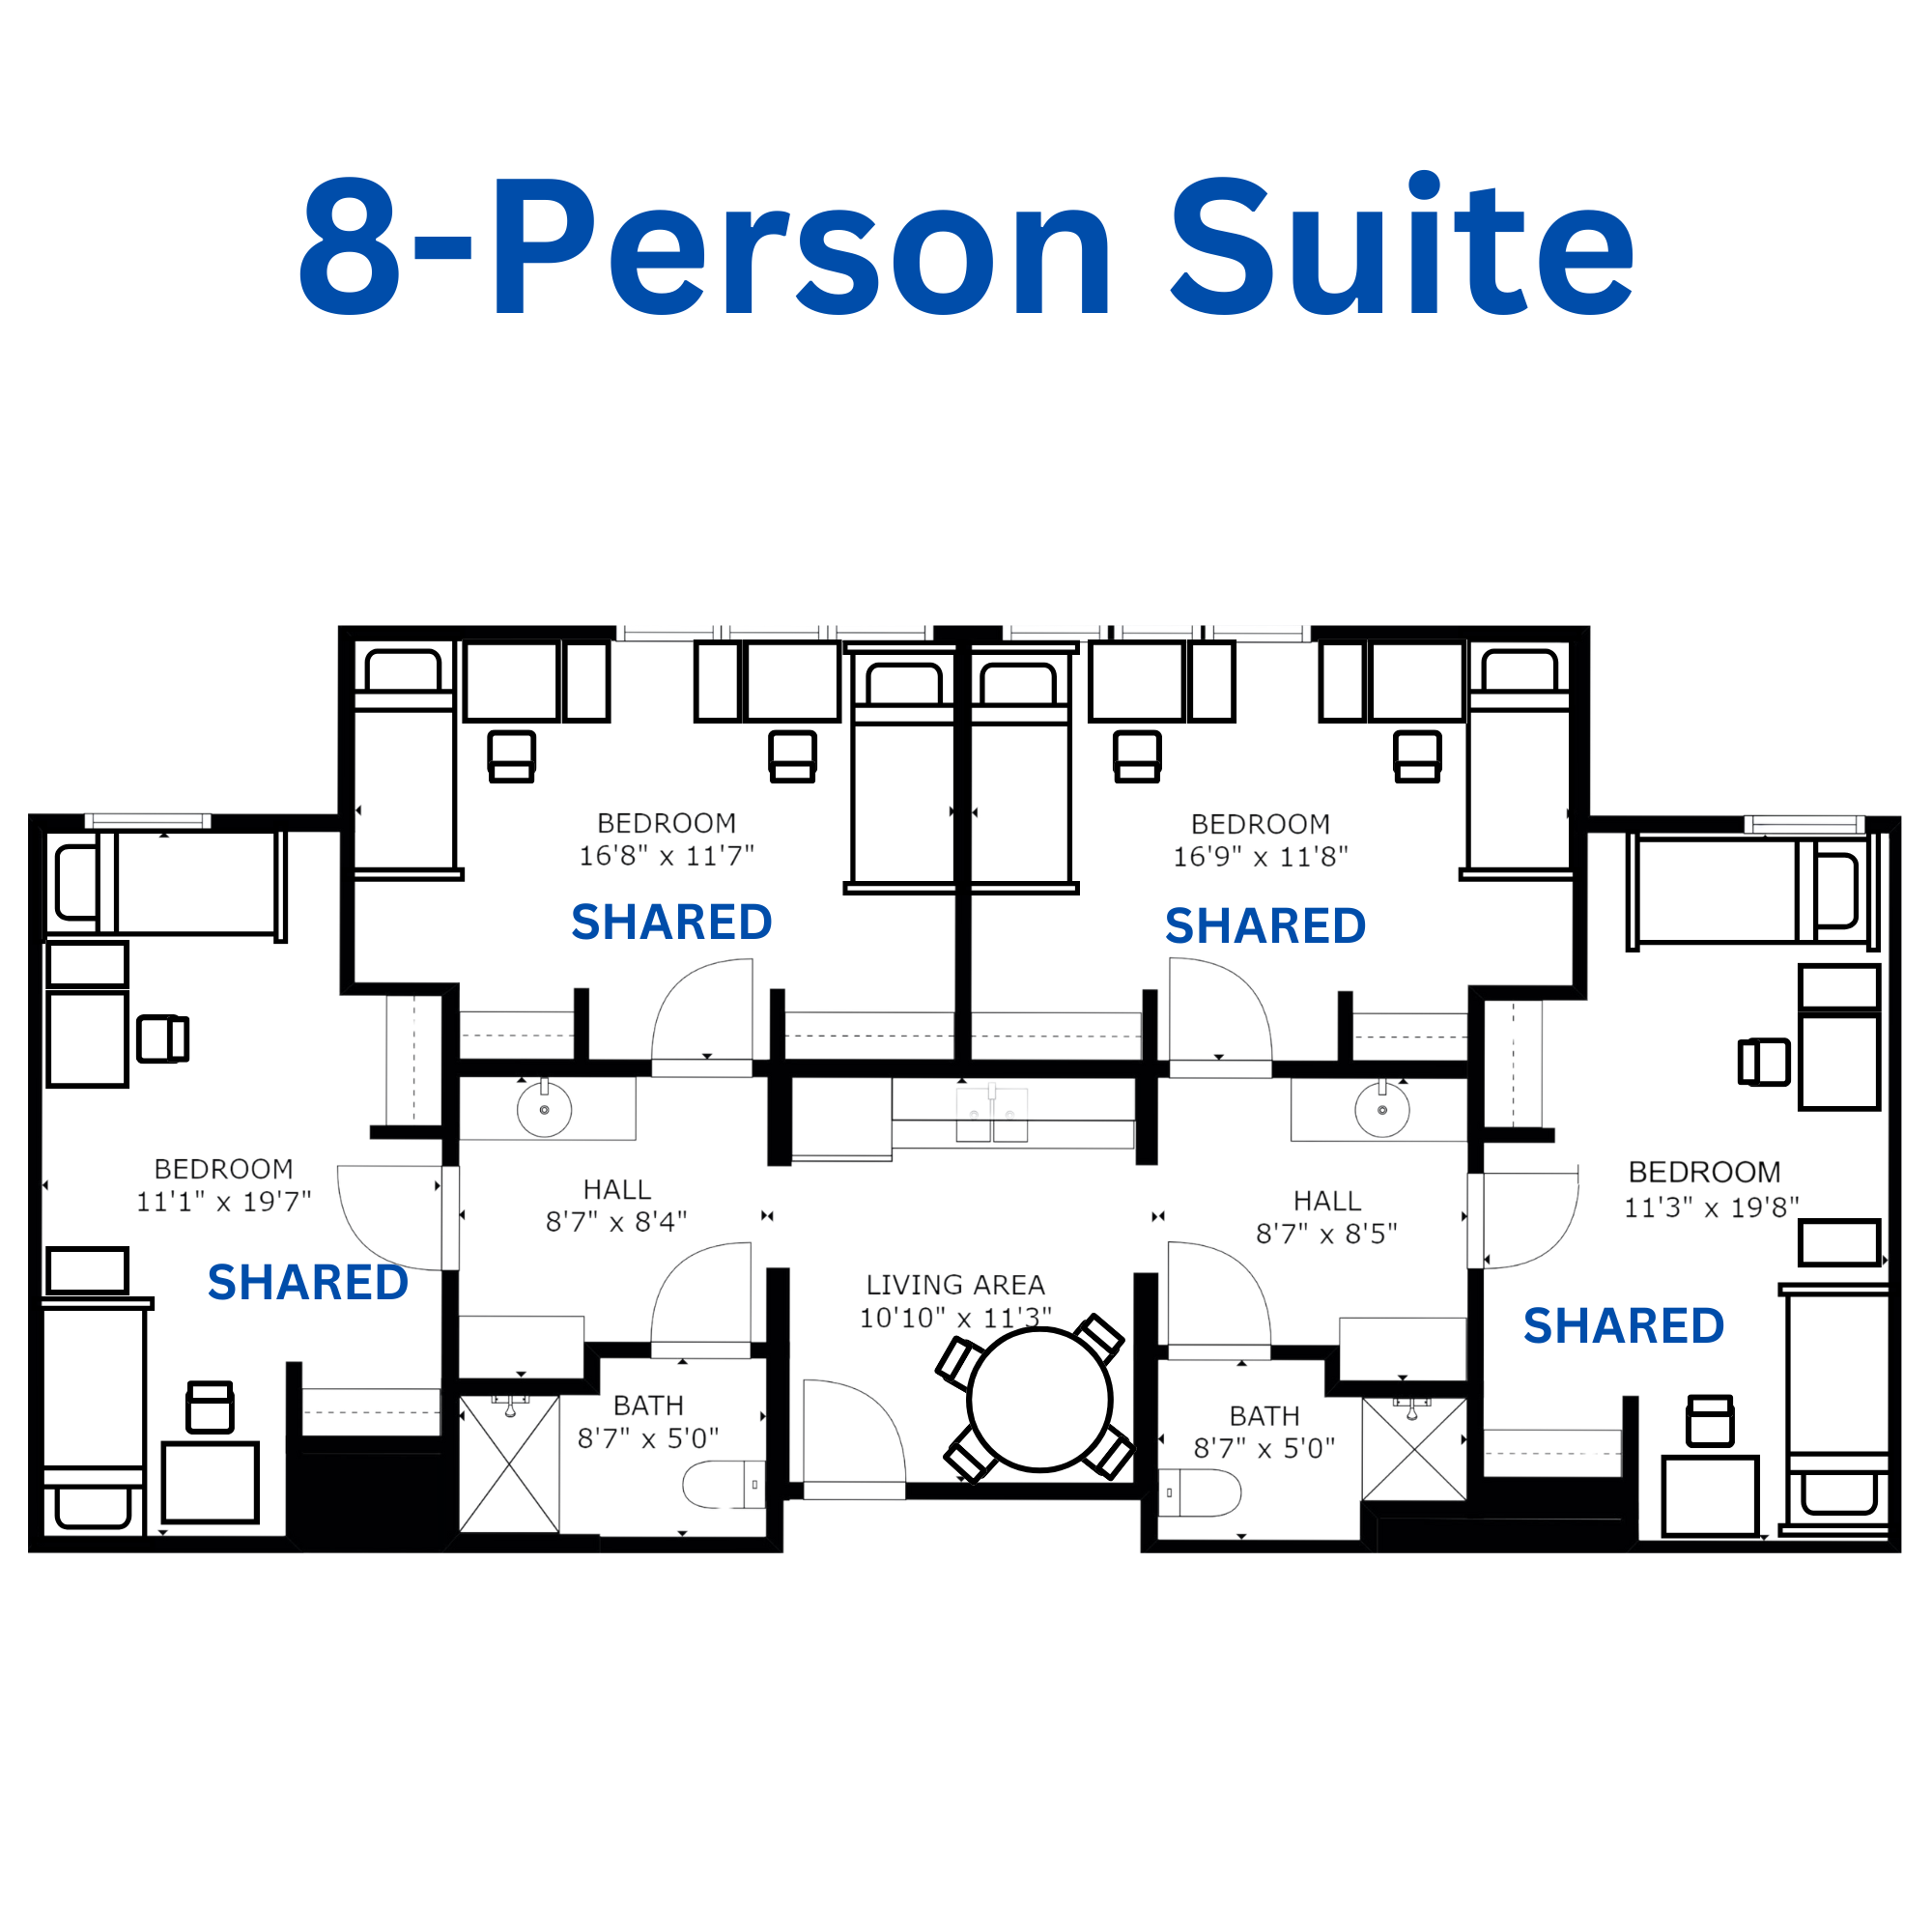 8-Person Suite Floor Plan